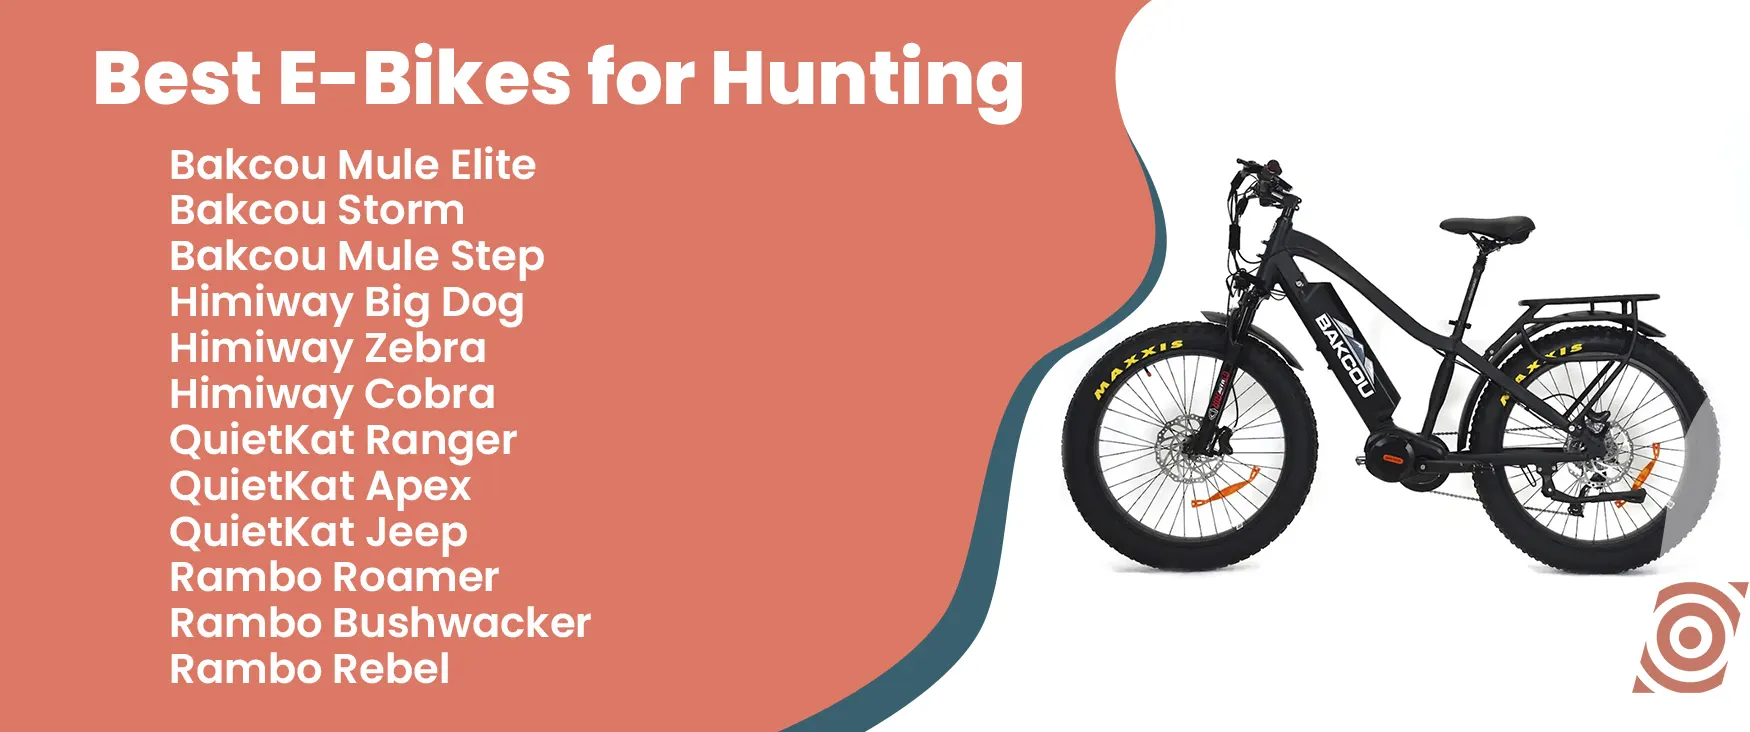 Best E-Bike for Hunting